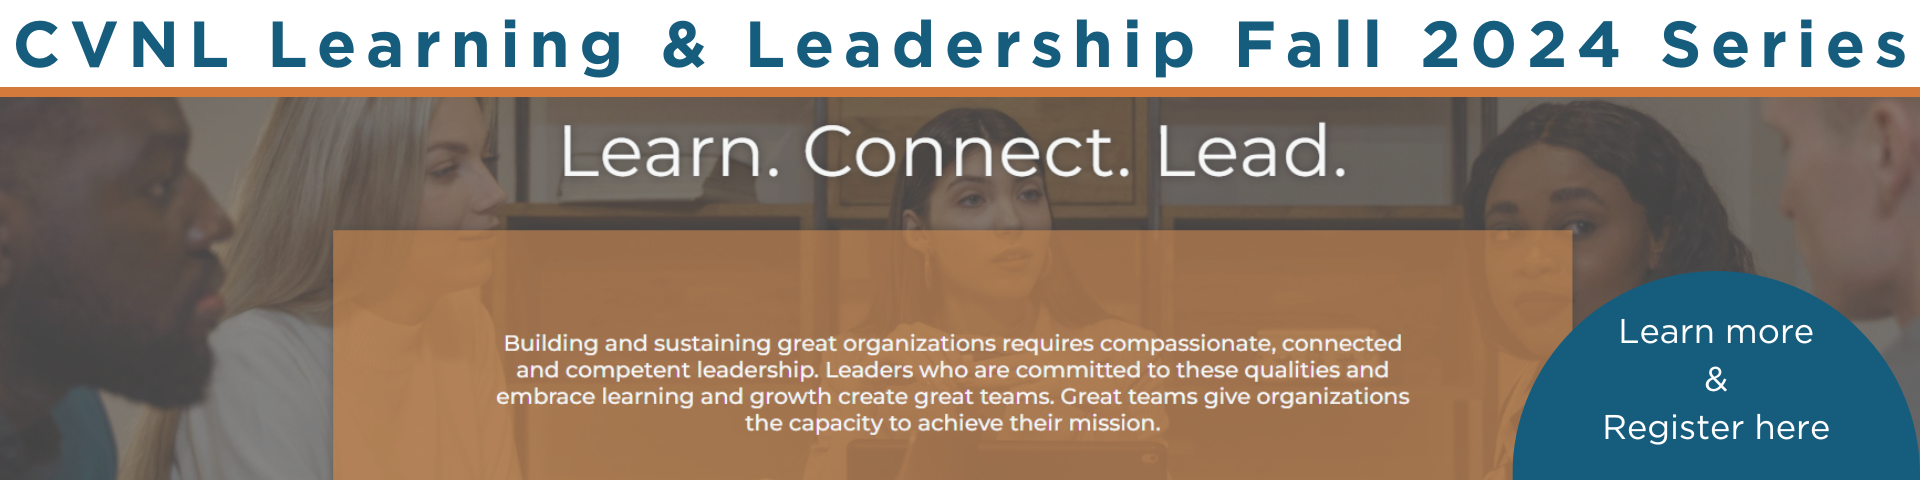 Register Here Fall 2024 Learning & Leadership Series